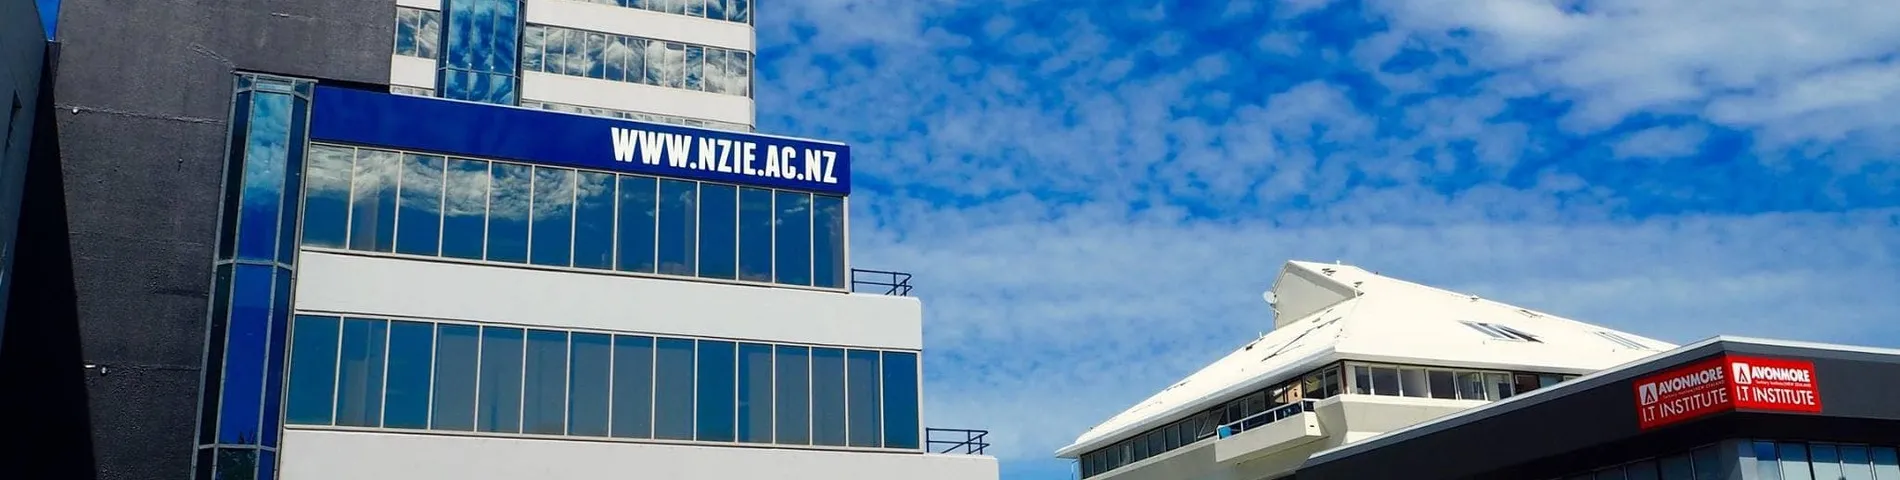 NZIE - New Zealand Institute of Education зображення 1